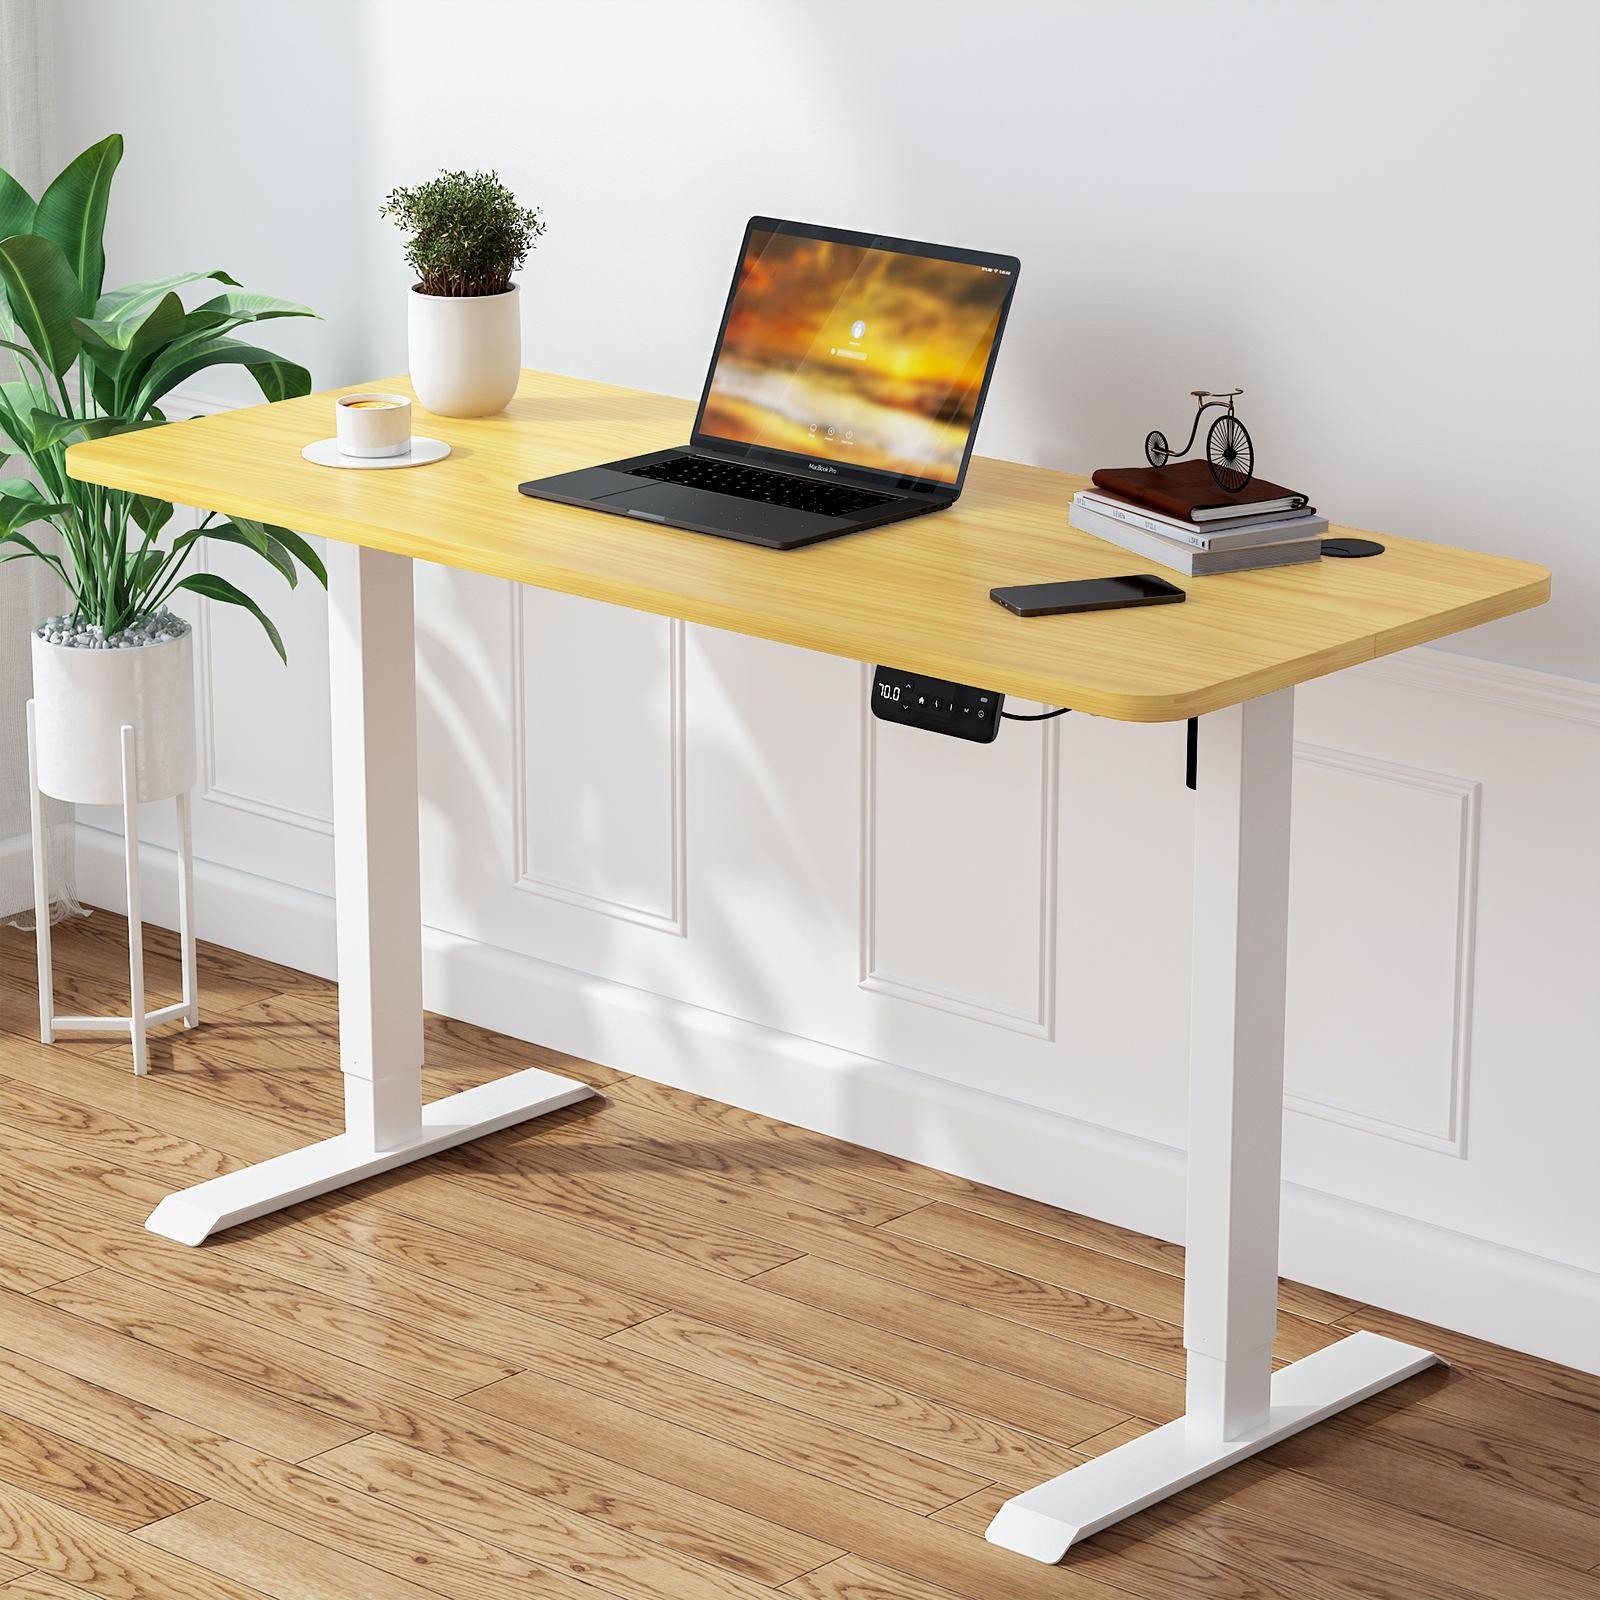 Adjustable Height Electric Standing Desk Oak Color